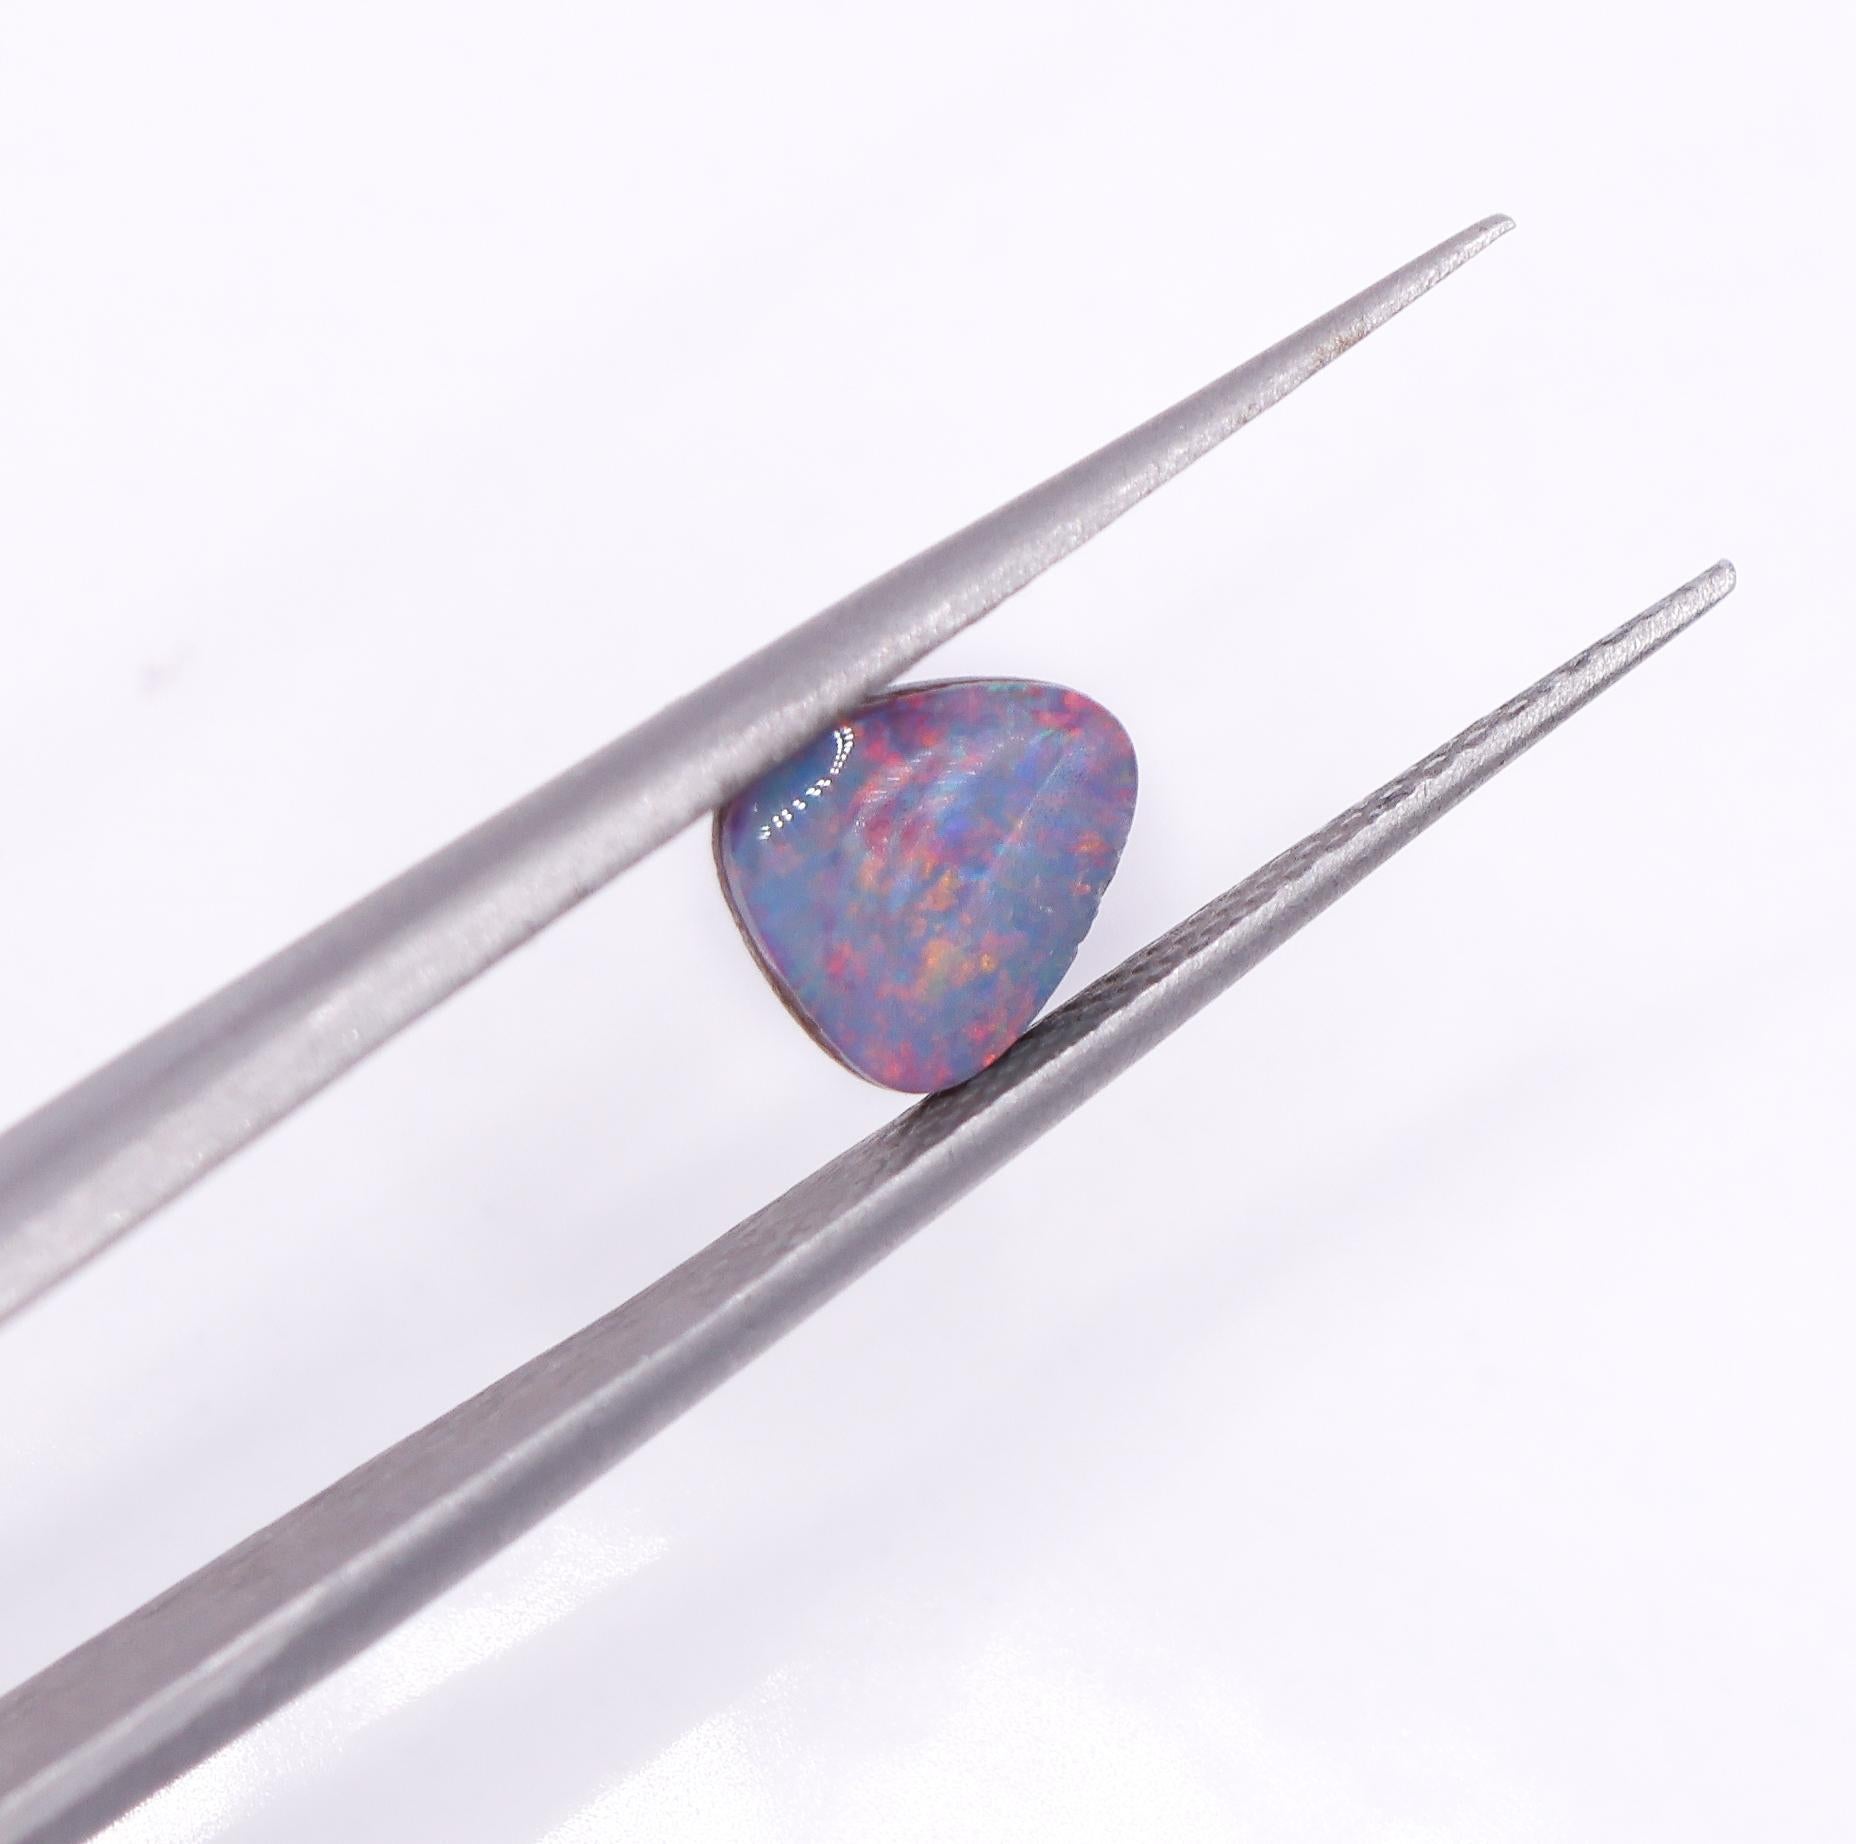 Presenting a 0.94 carat australian boulder opal loose gemstone! 

Specifications

Stone: Boulder Opal
Shape: Trillion
Treatment: None
Hardness: 5.5-6.5
Cut: Cabochon
Origin: Australia
Clarity: Eye clean
Number of Pieces: